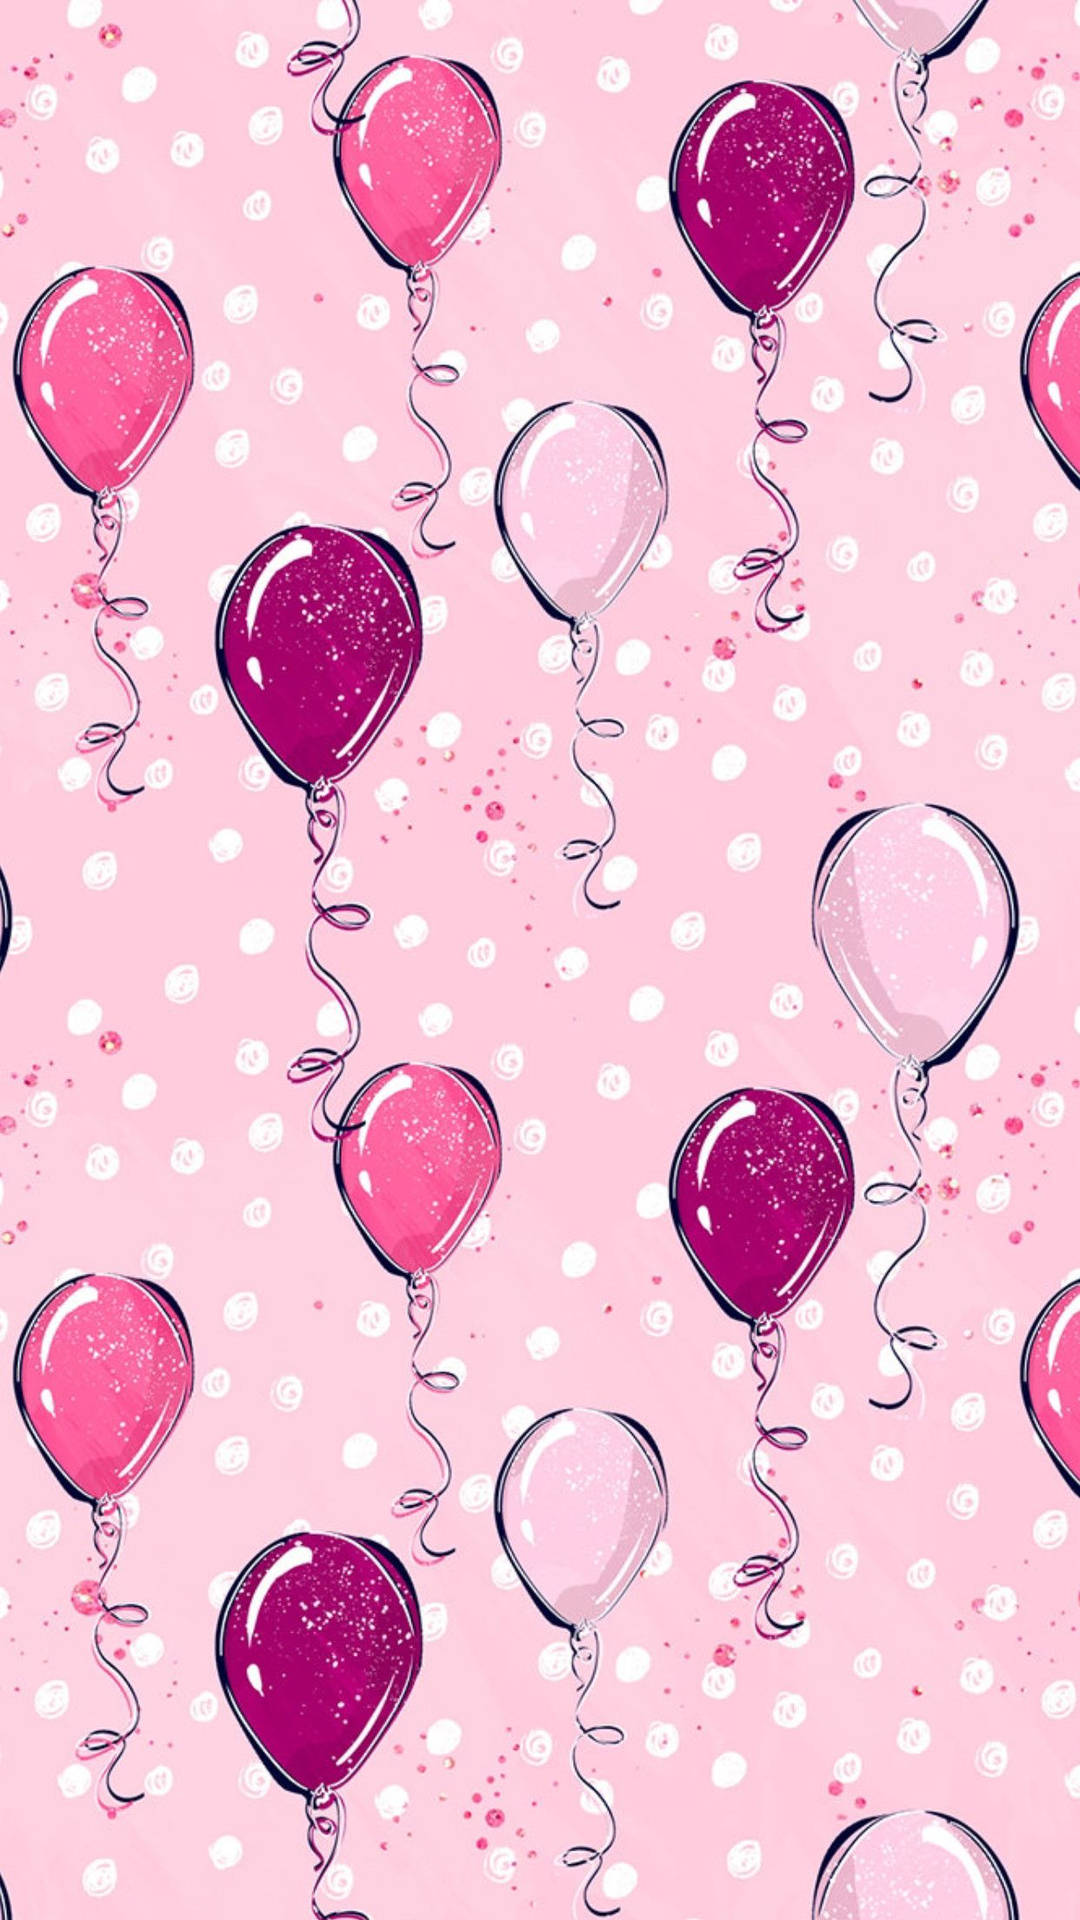 Cute Mobile Balloon Art Background